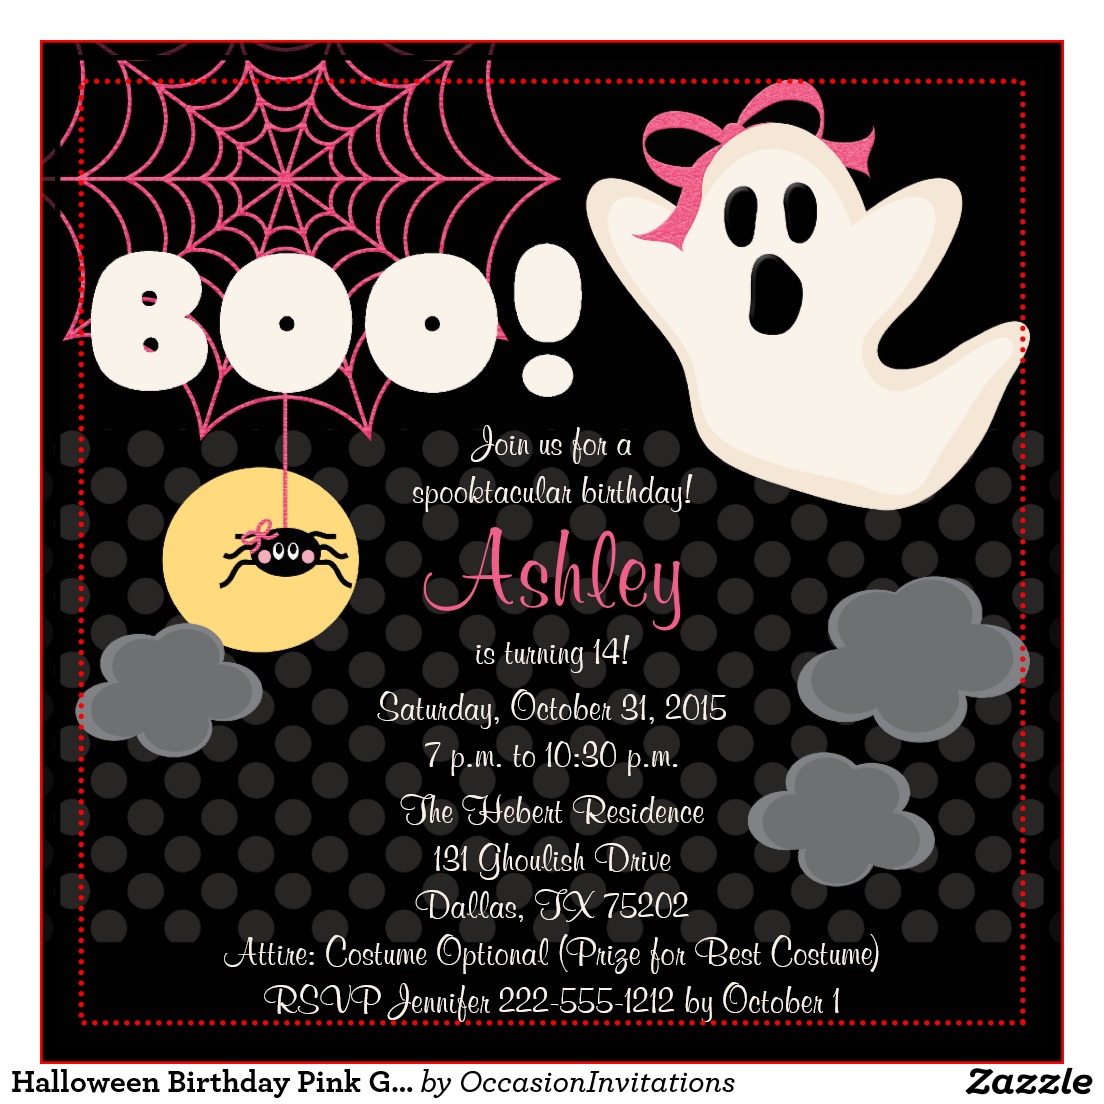 Halloween Themed Birthday Party Invitations Dolanpedia